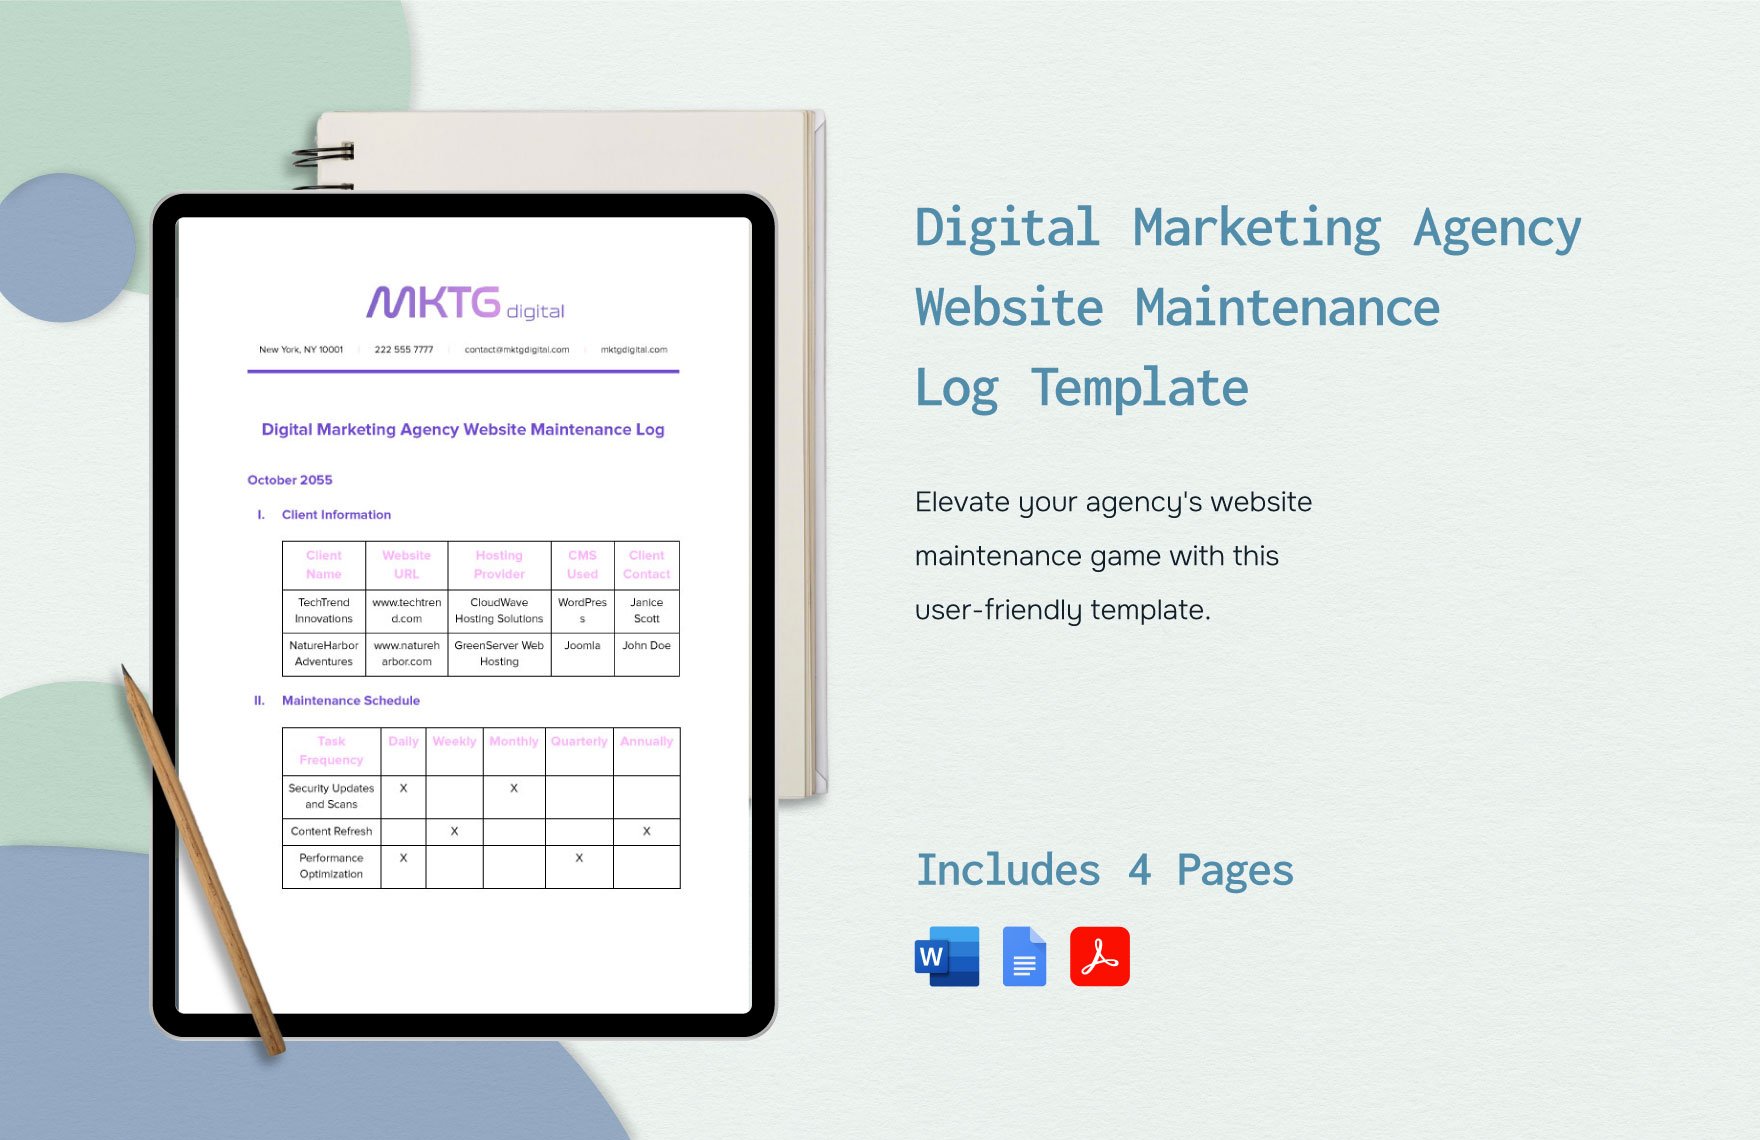 Digital Marketing Agency Website Maintenance Log Template